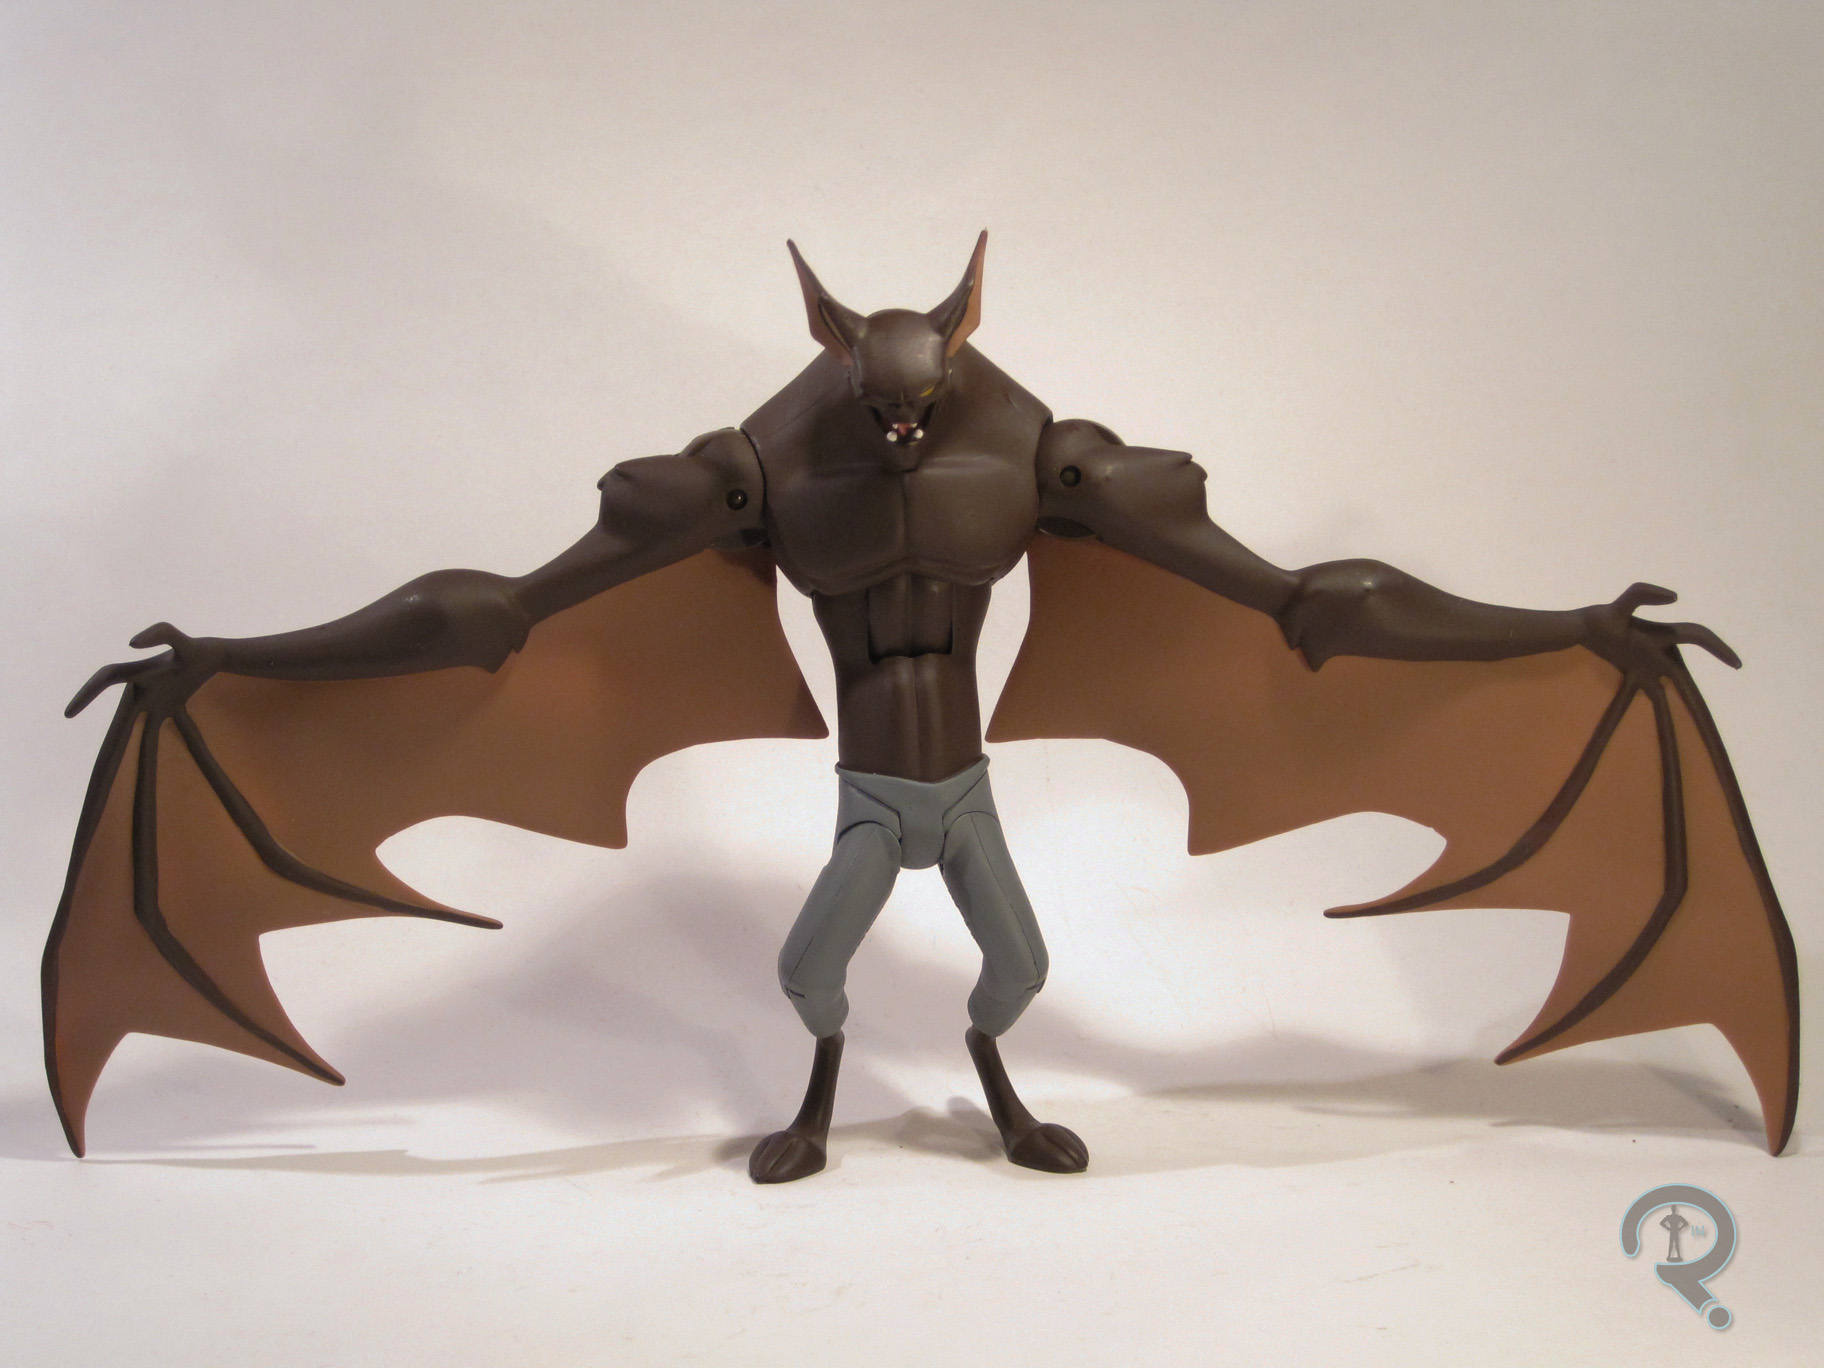 0575: Man-Bat | The Figure In Question